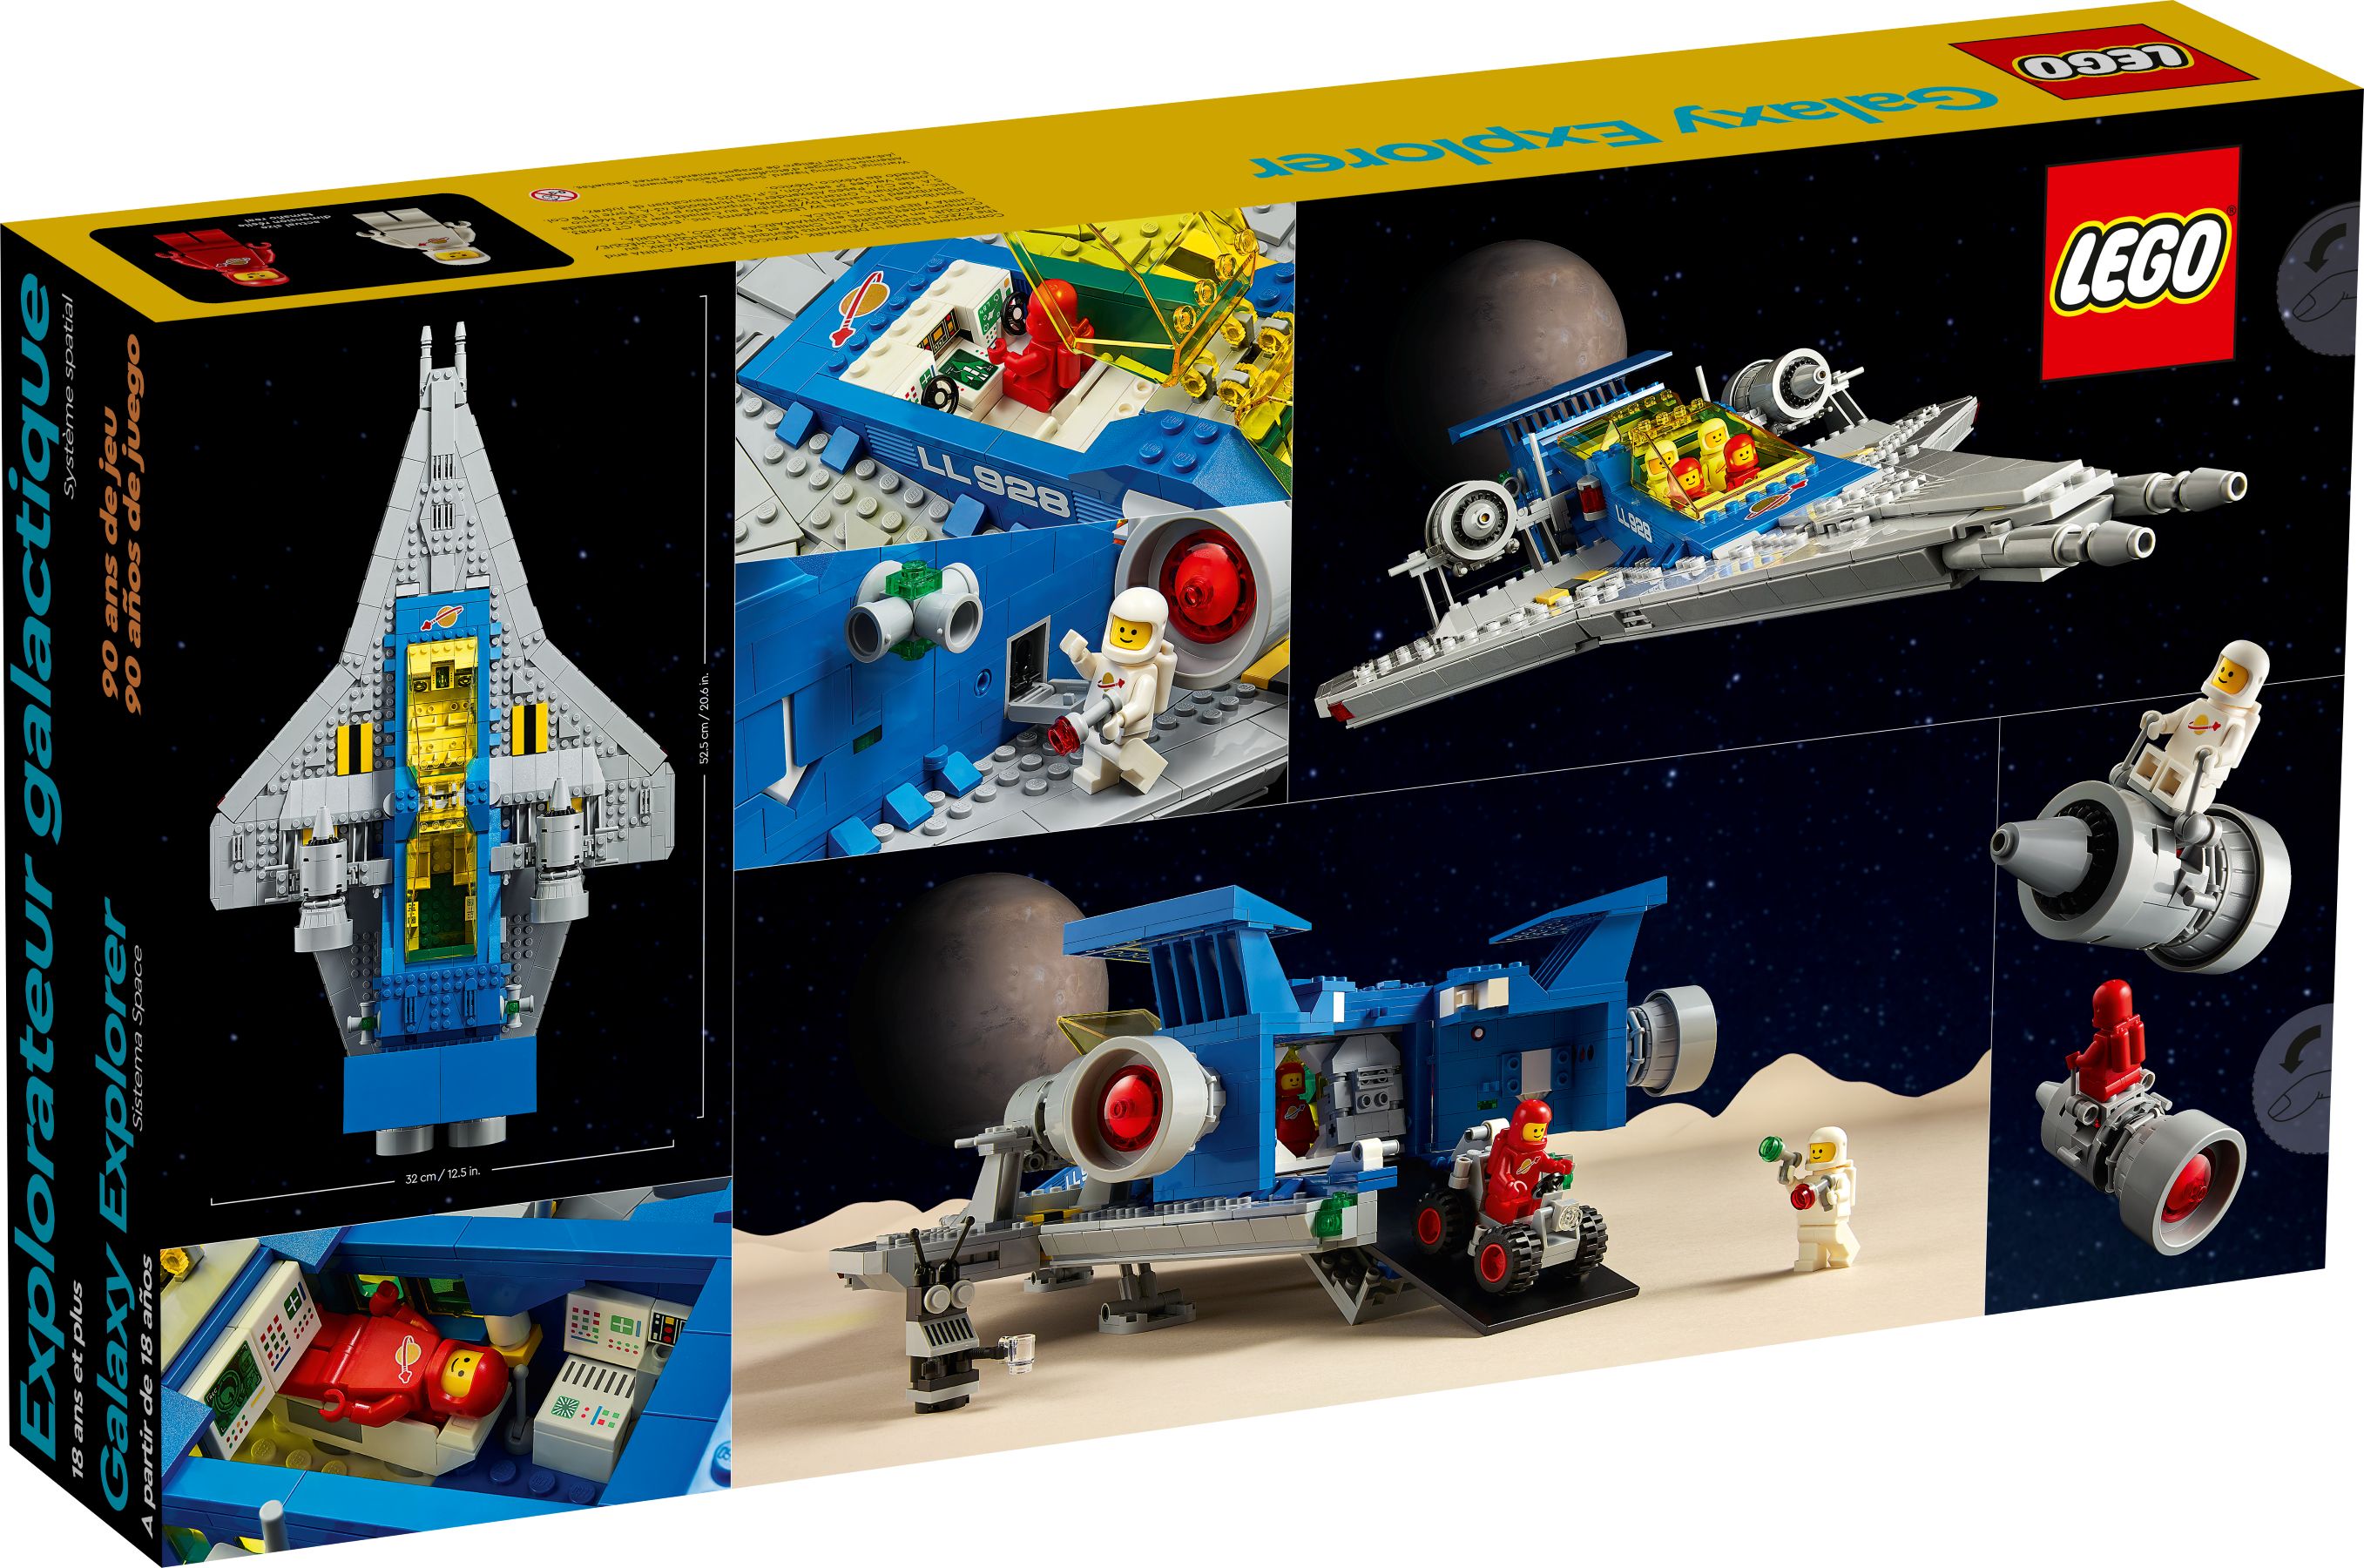 LEGO Advanced Models 10497 Galaxy Explorer LEGO_10497_alt4.jpg